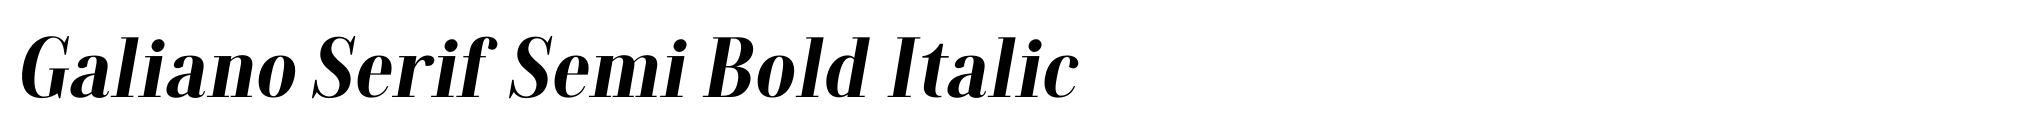 Galiano Serif Semi Bold Italic image